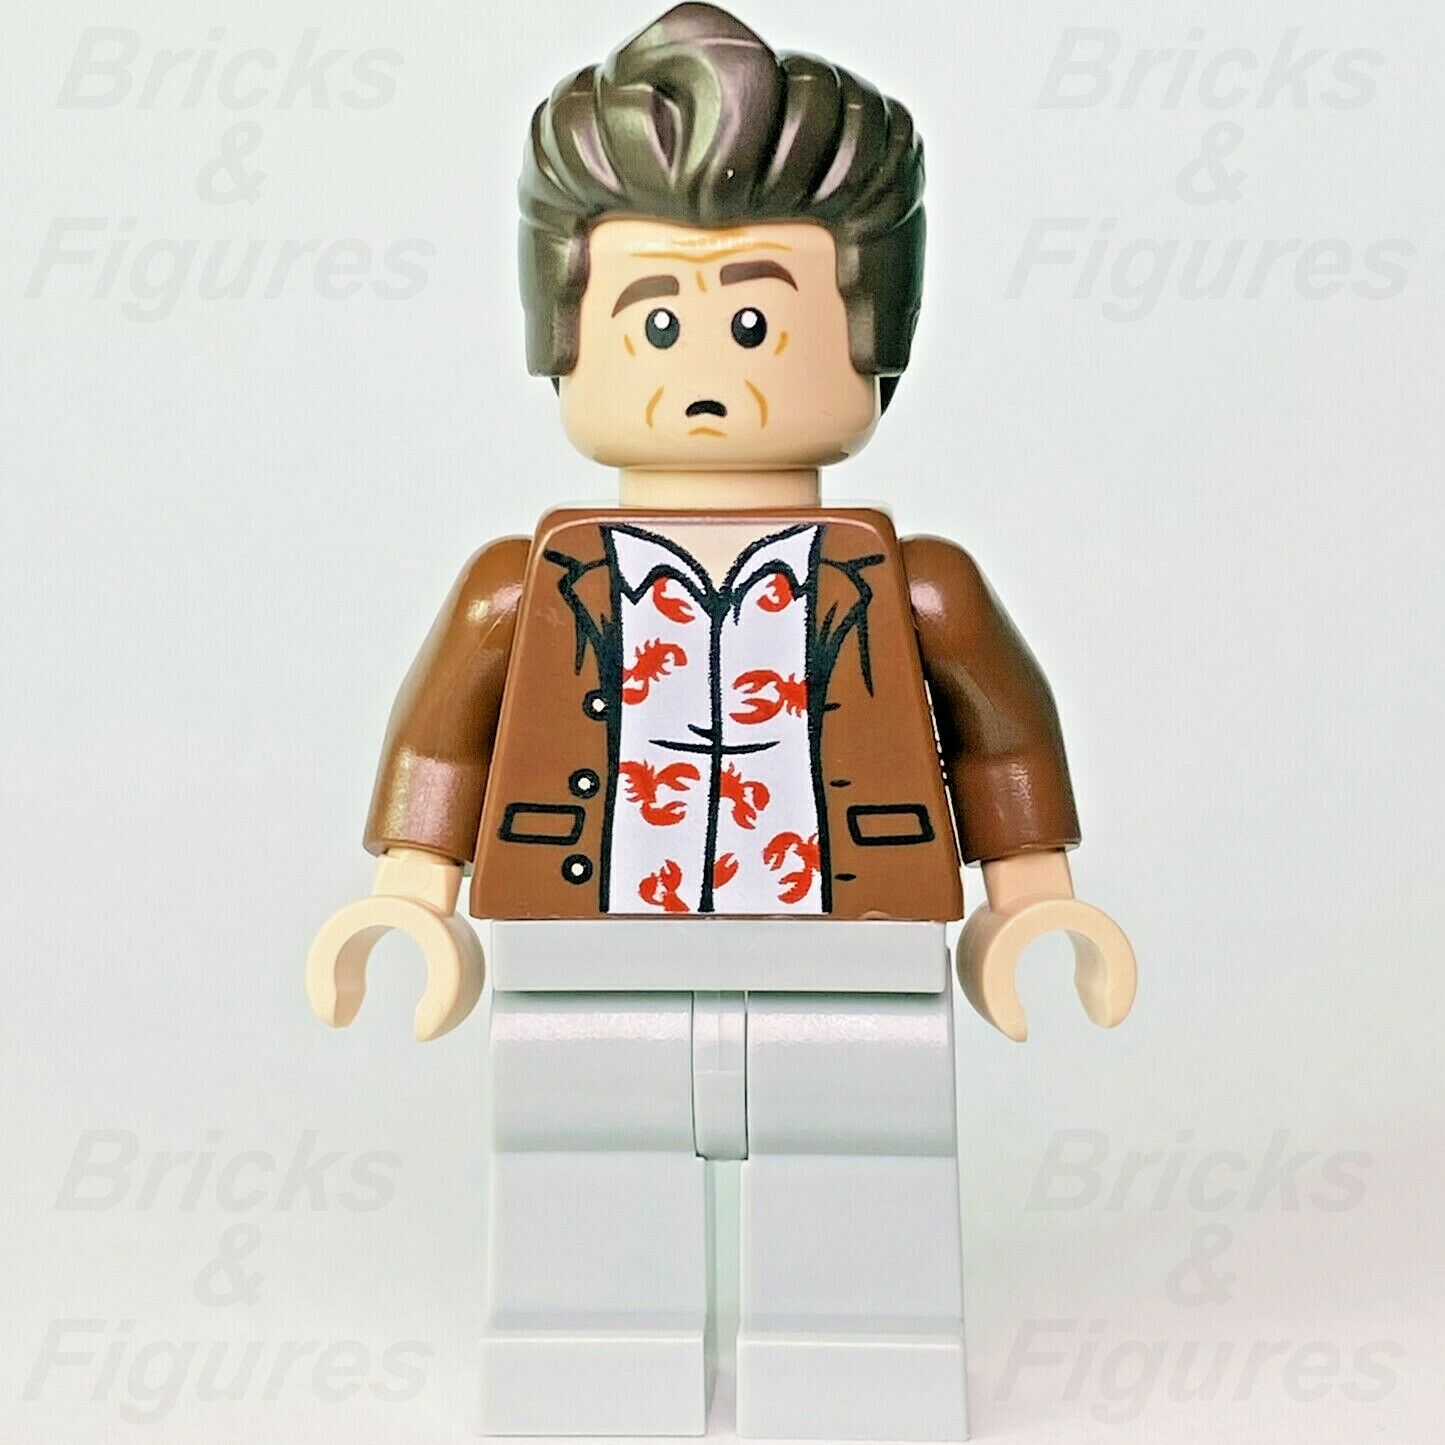 New Ideas LEGO Cosmo Kramer CUUSOO Seinfeld TV Show Minifigure 21328 idea094 - Bricks & Figures